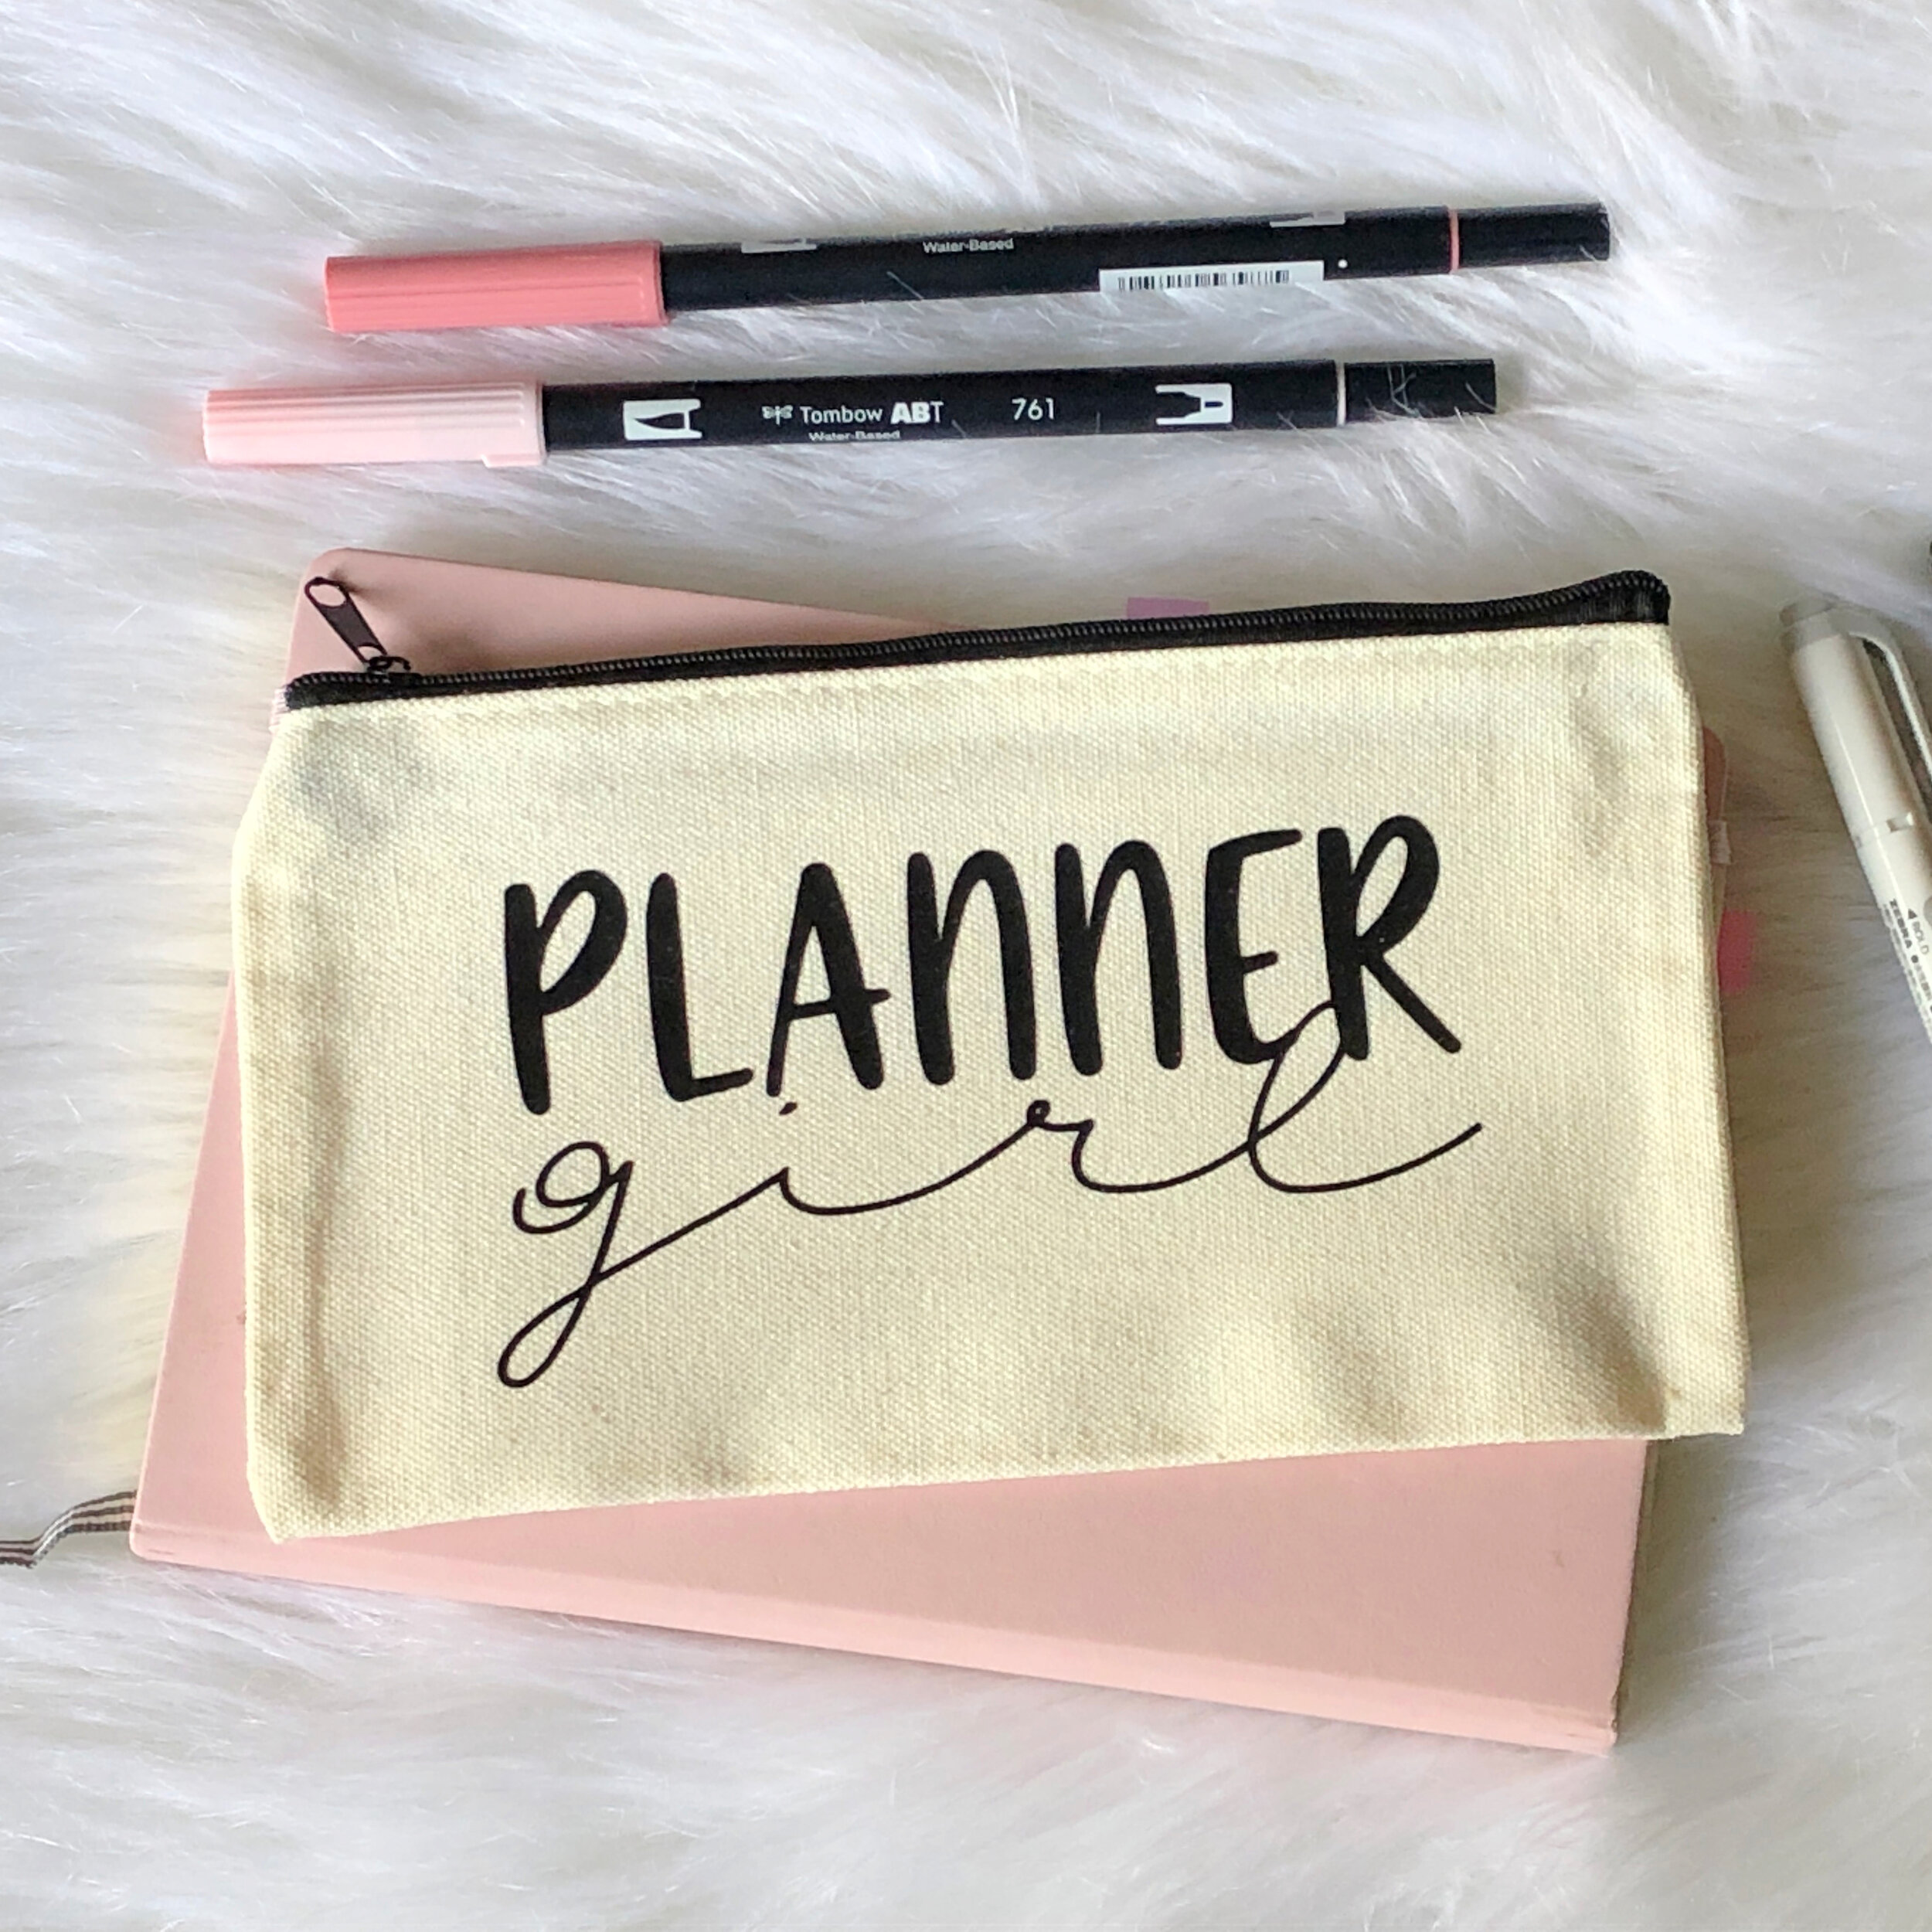 Planner Girl Pouch.jpg